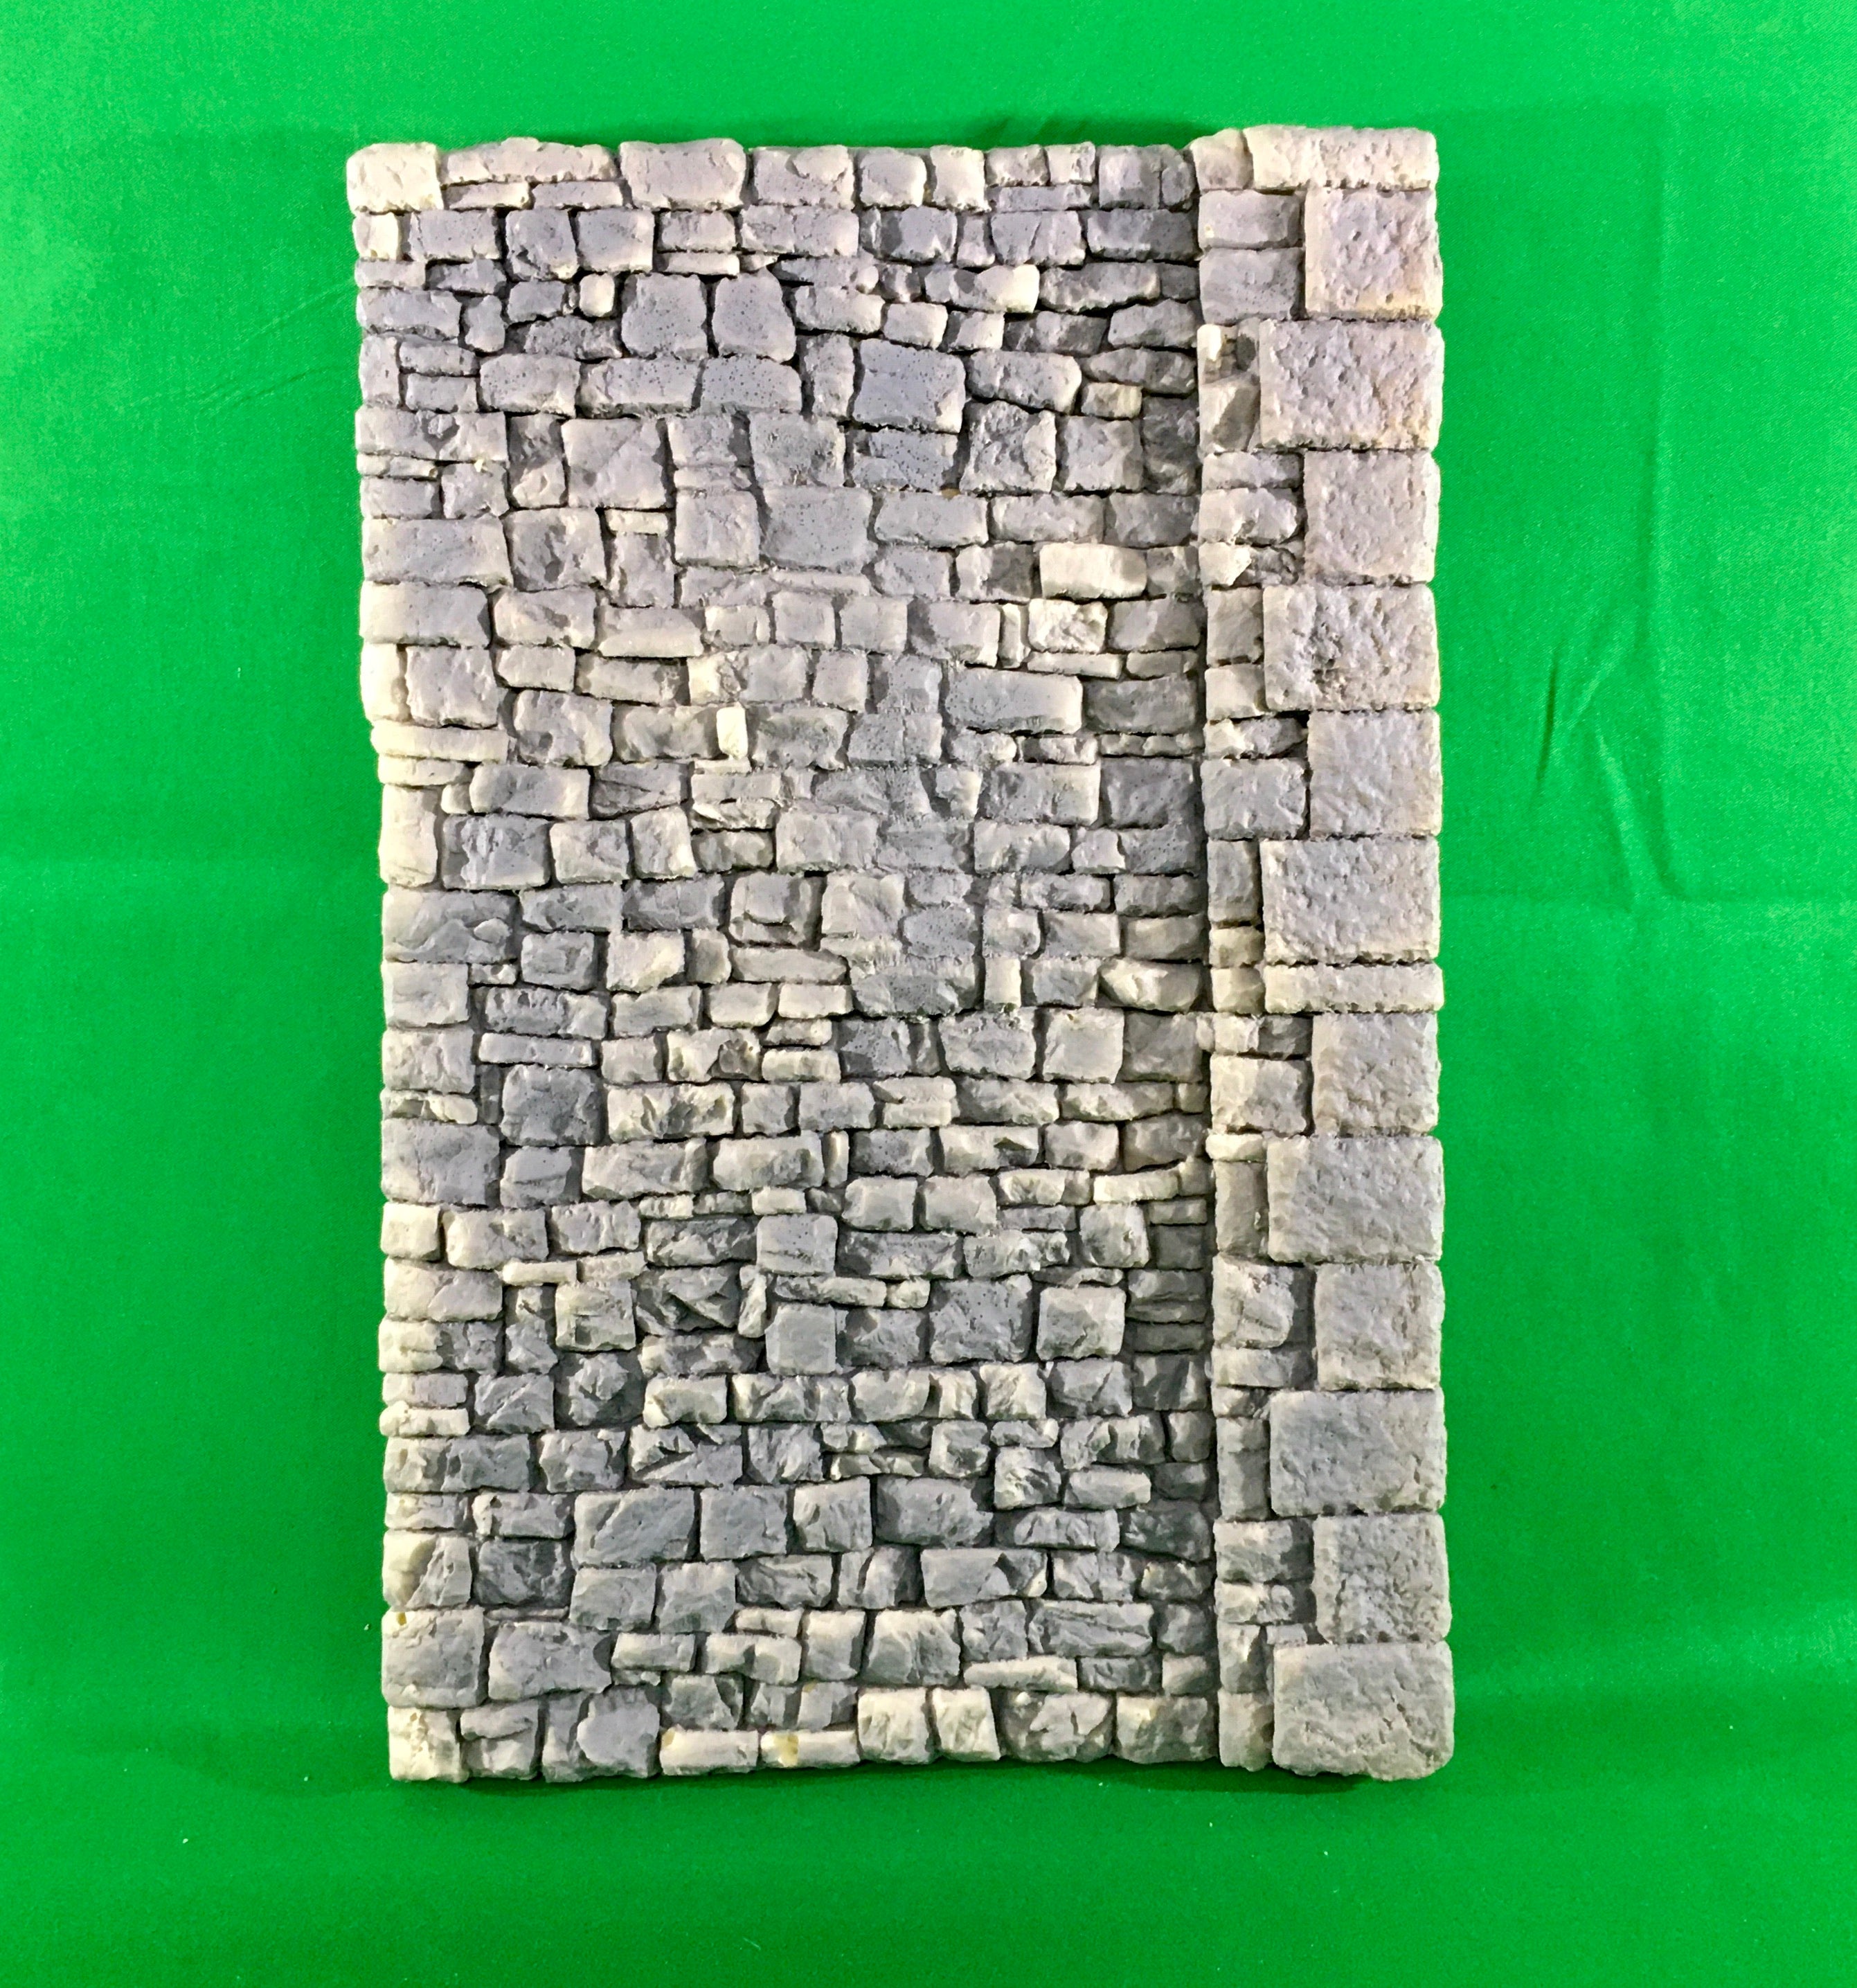 Atherton Scenics 6160 - "Rough Cut" Vertical Stone Wall